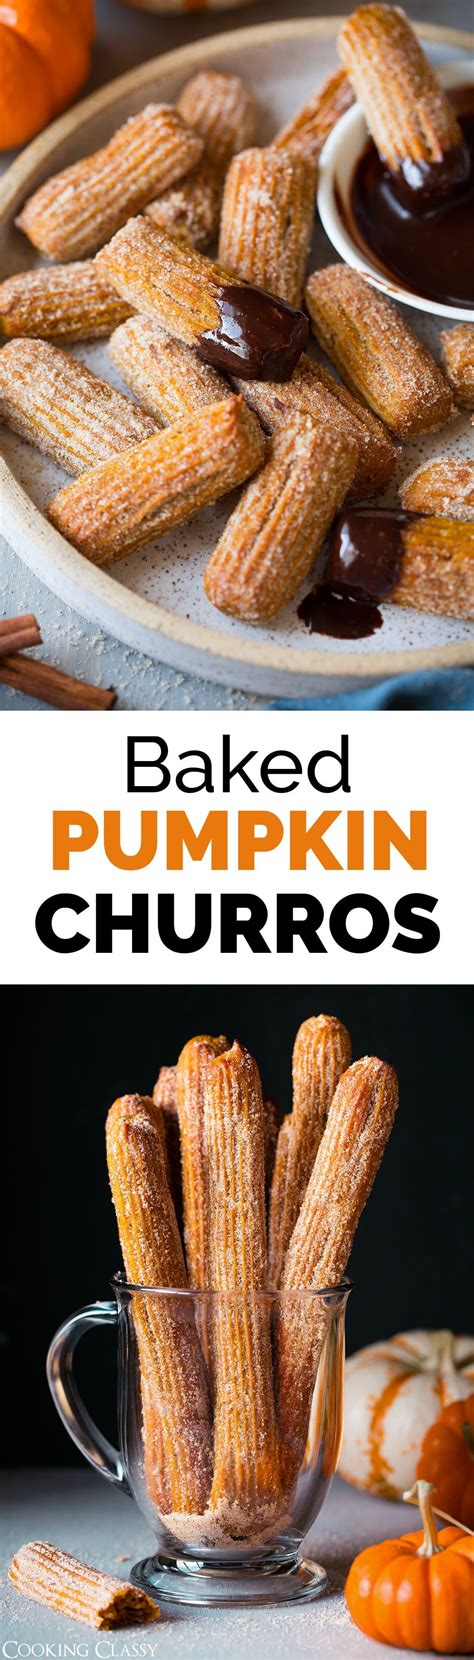 Baked Pumpkin Churros Via Cookingclassy Pumpkin Churros